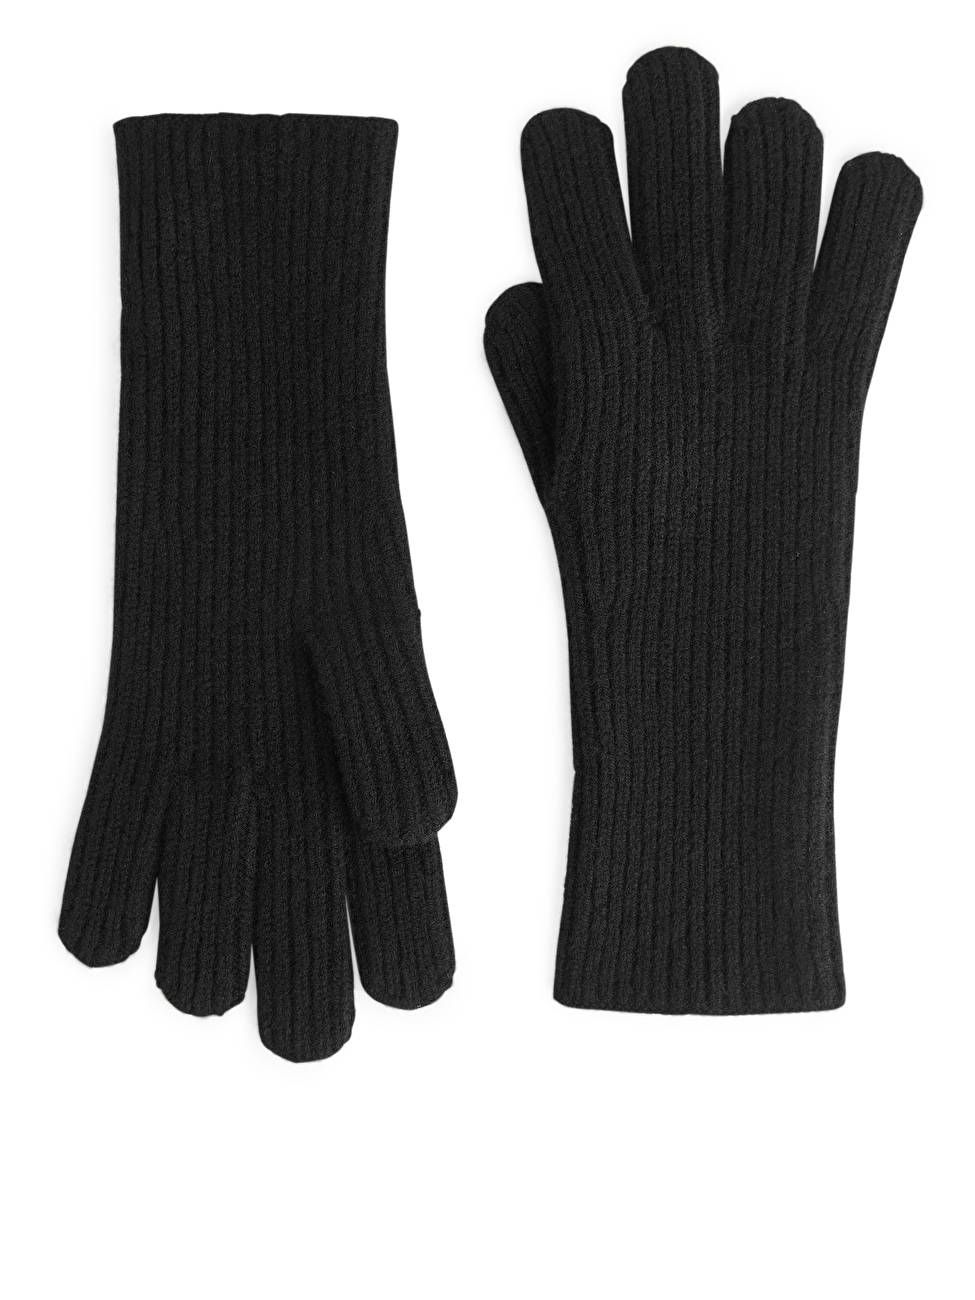 Knitted Cashmere Gloves
				
				£35 | ARKET (US&UK)